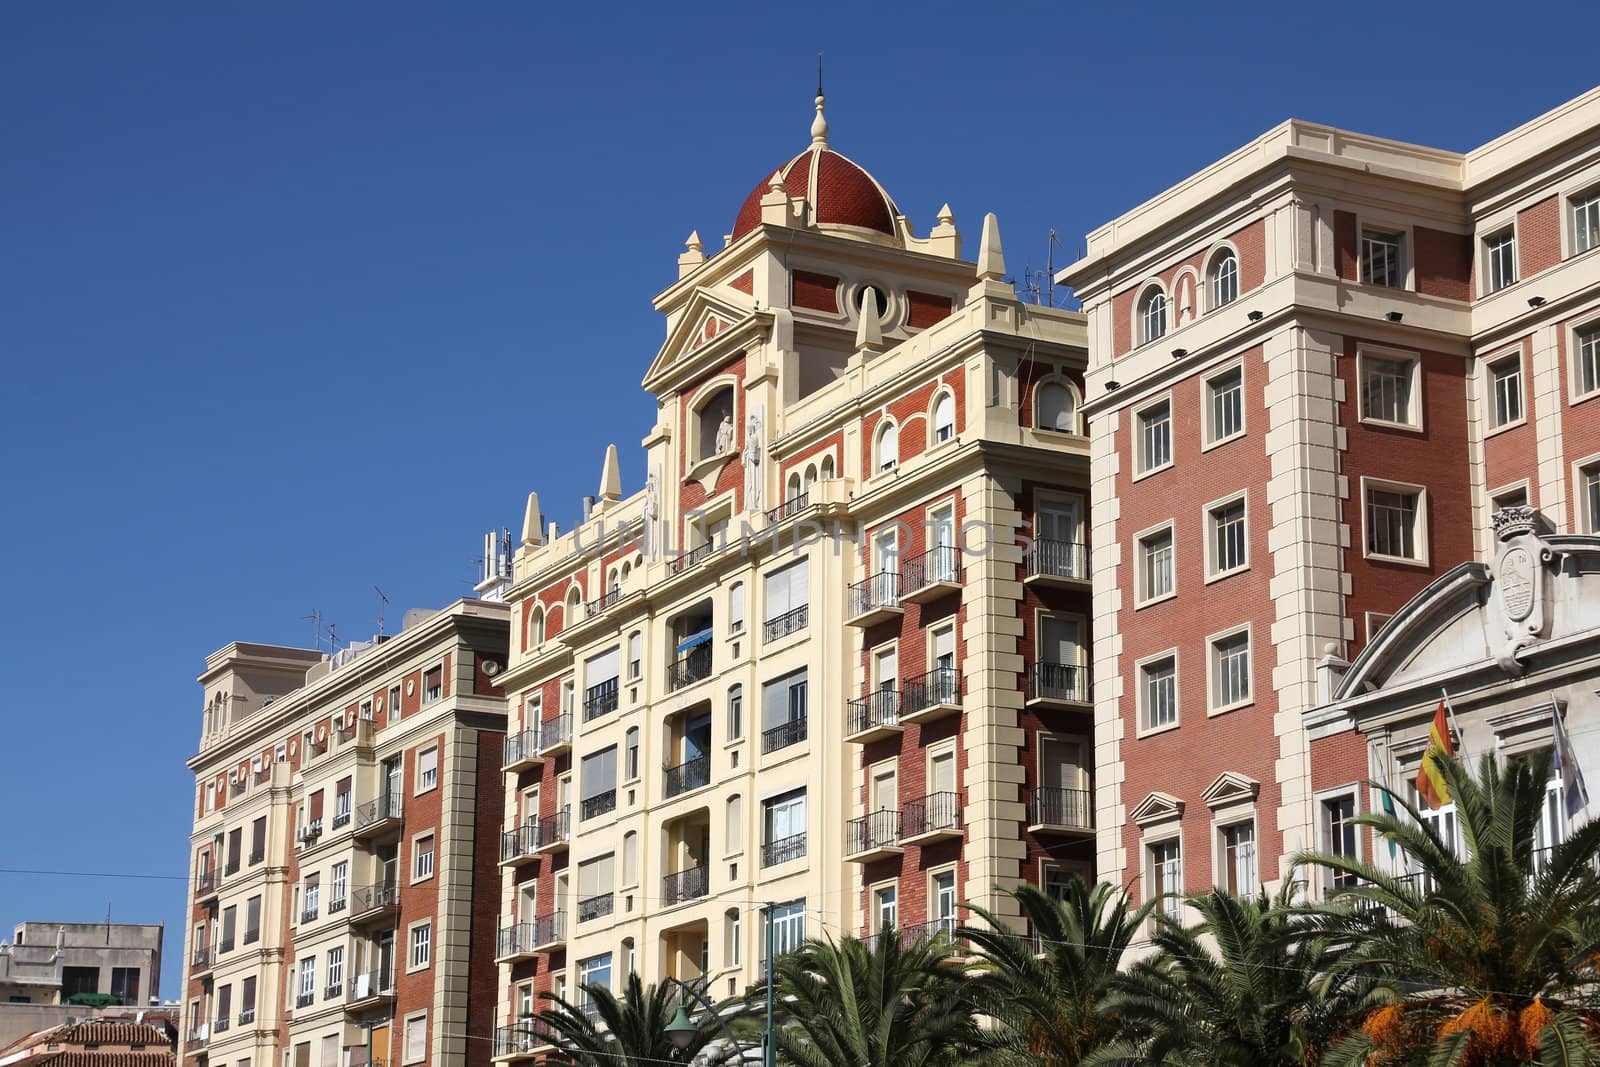 Malaga, Spain by tupungato